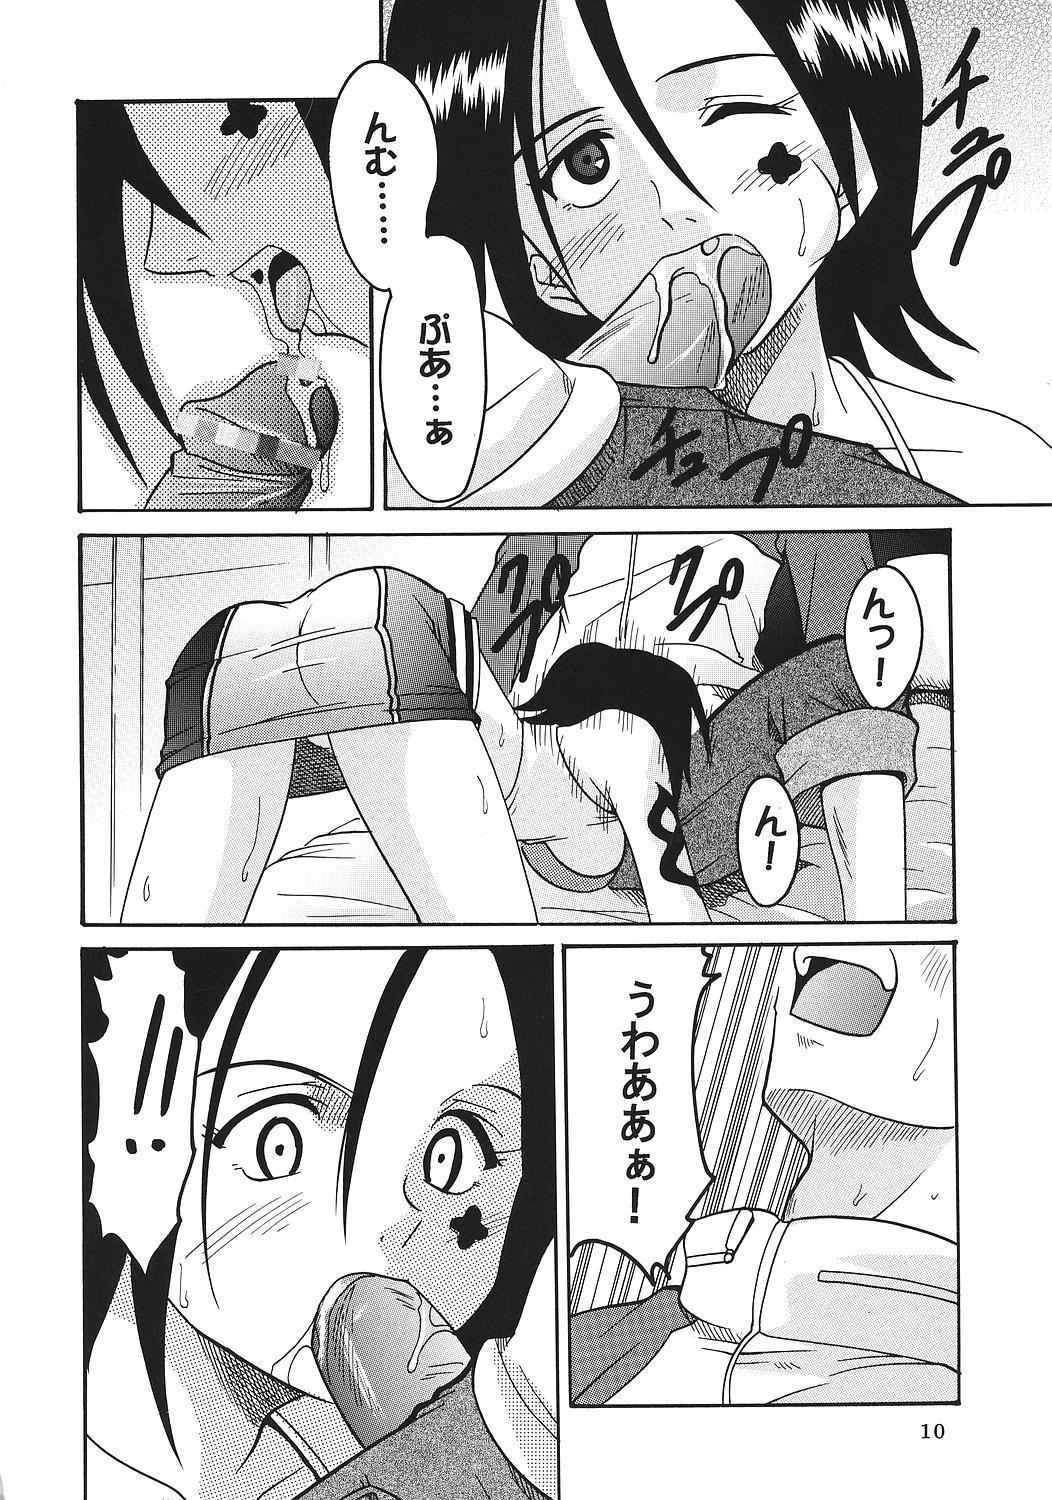 Anime Ura ray-out vol.2 - Eureka 7 Bang - Page 11